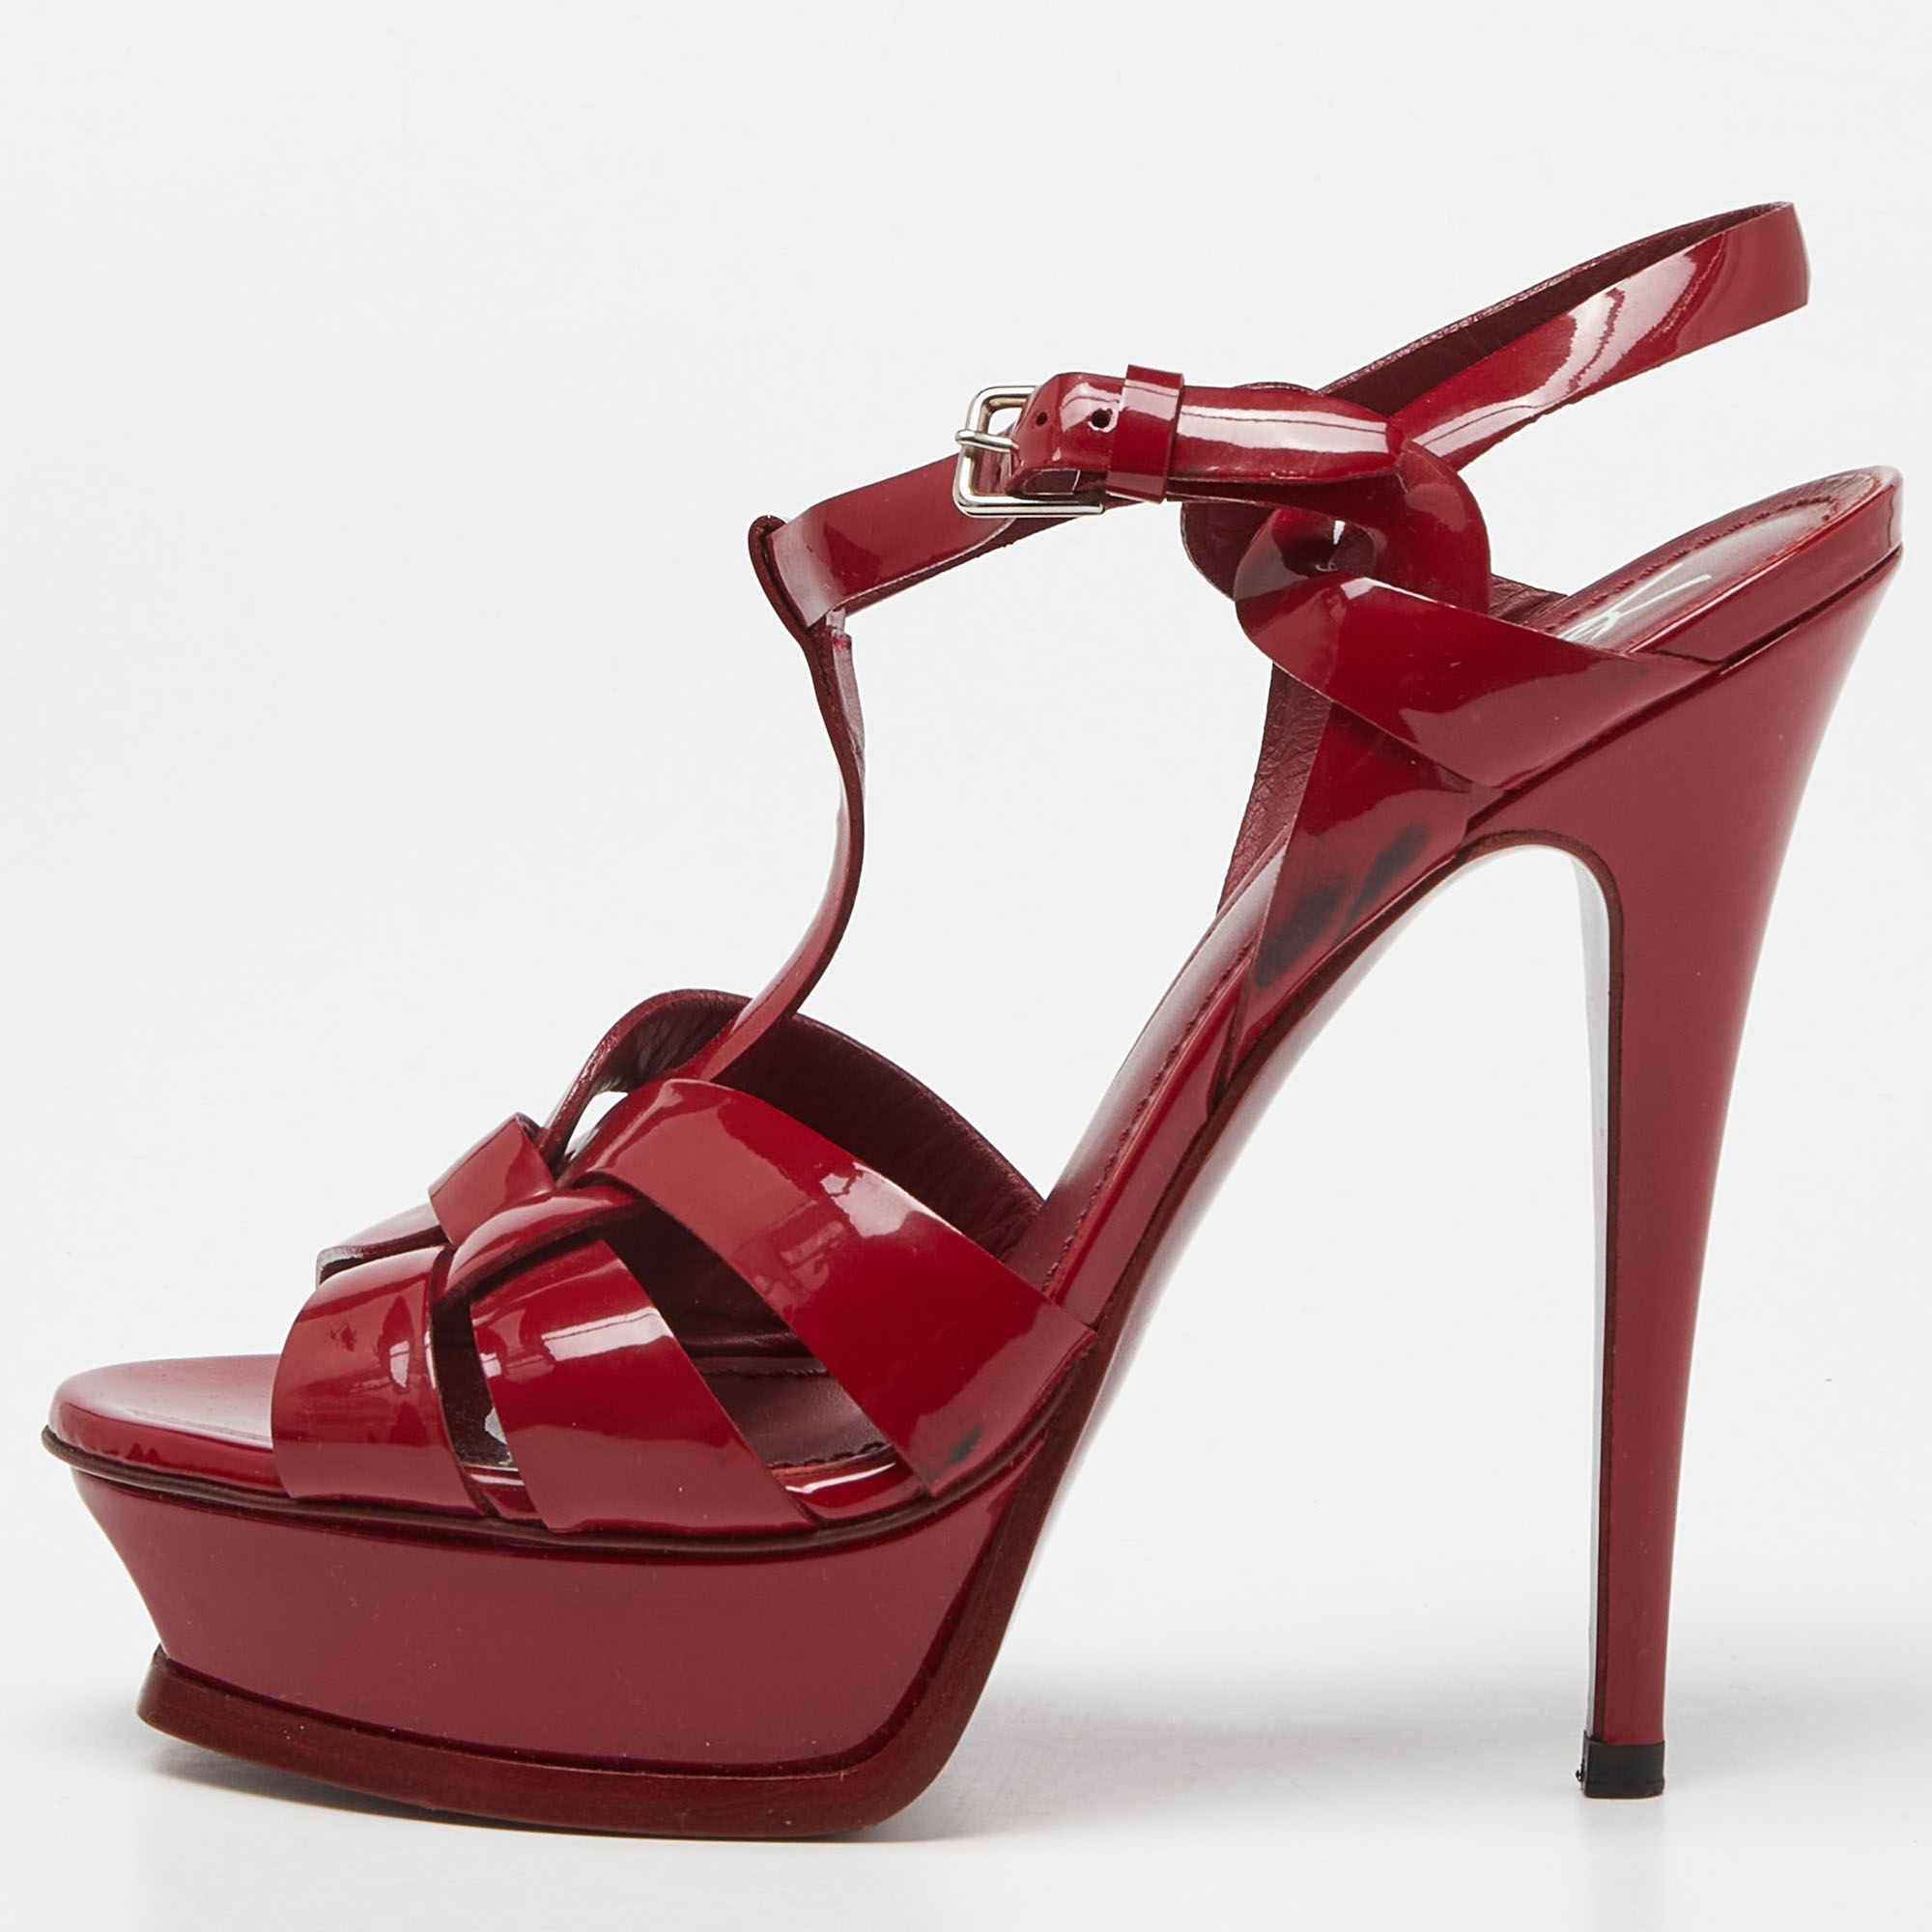 Yves saint laurent red patent leather tribute platform sandals size 37